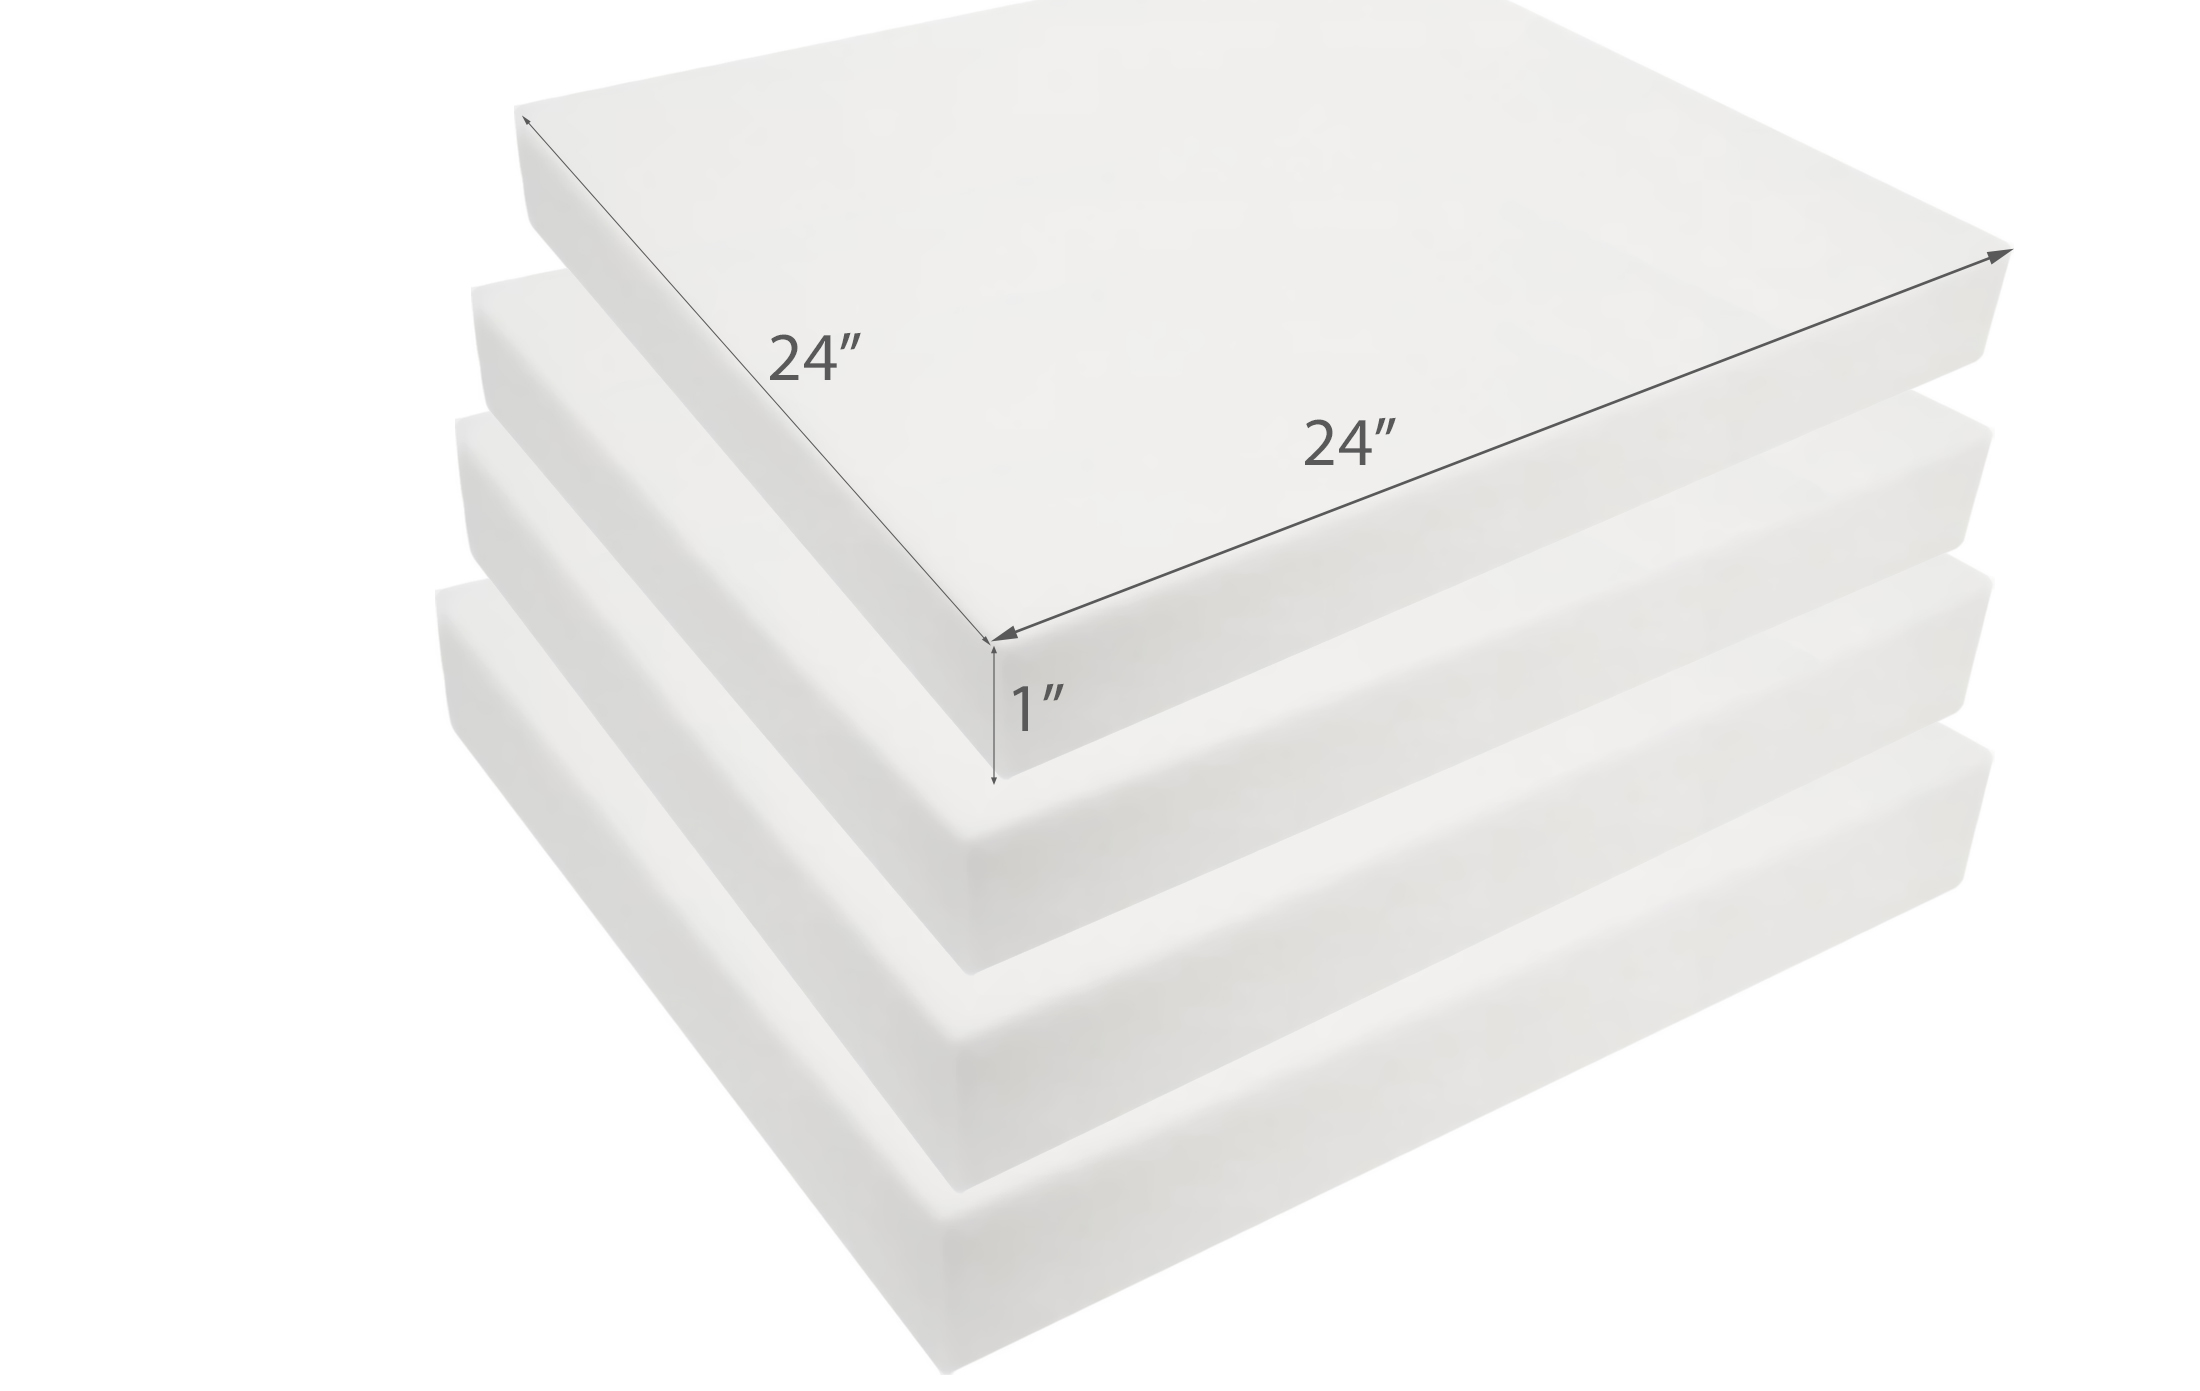 FoamTouch Upholstery Foam Cushion High Density 5'' Height x 30'' Width x  72'' Length